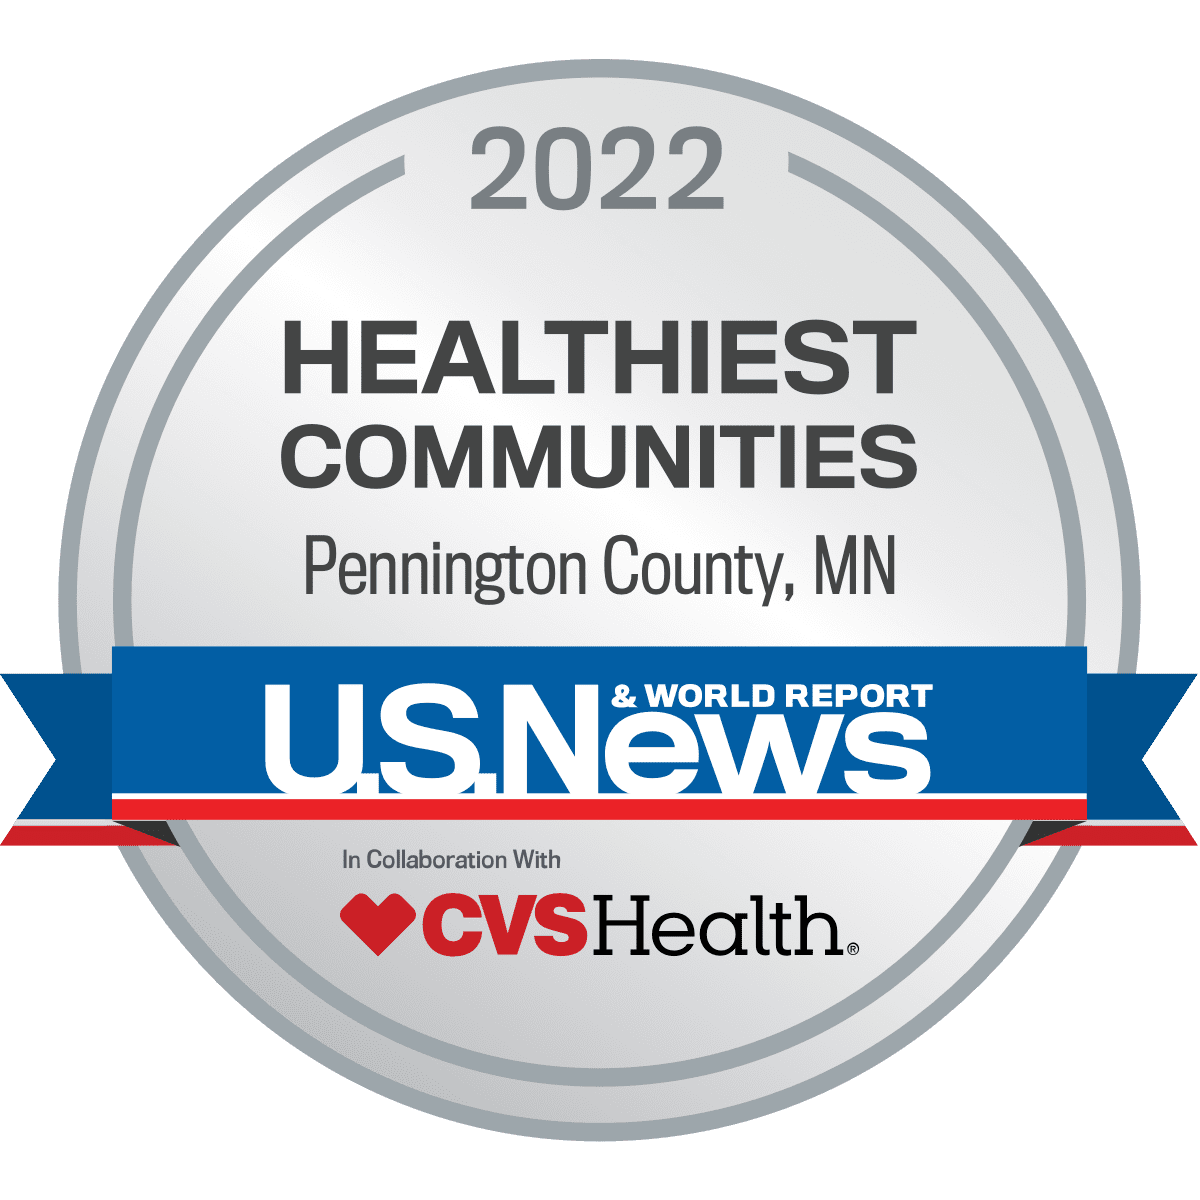 Pennington County Healthiest Communities 2022